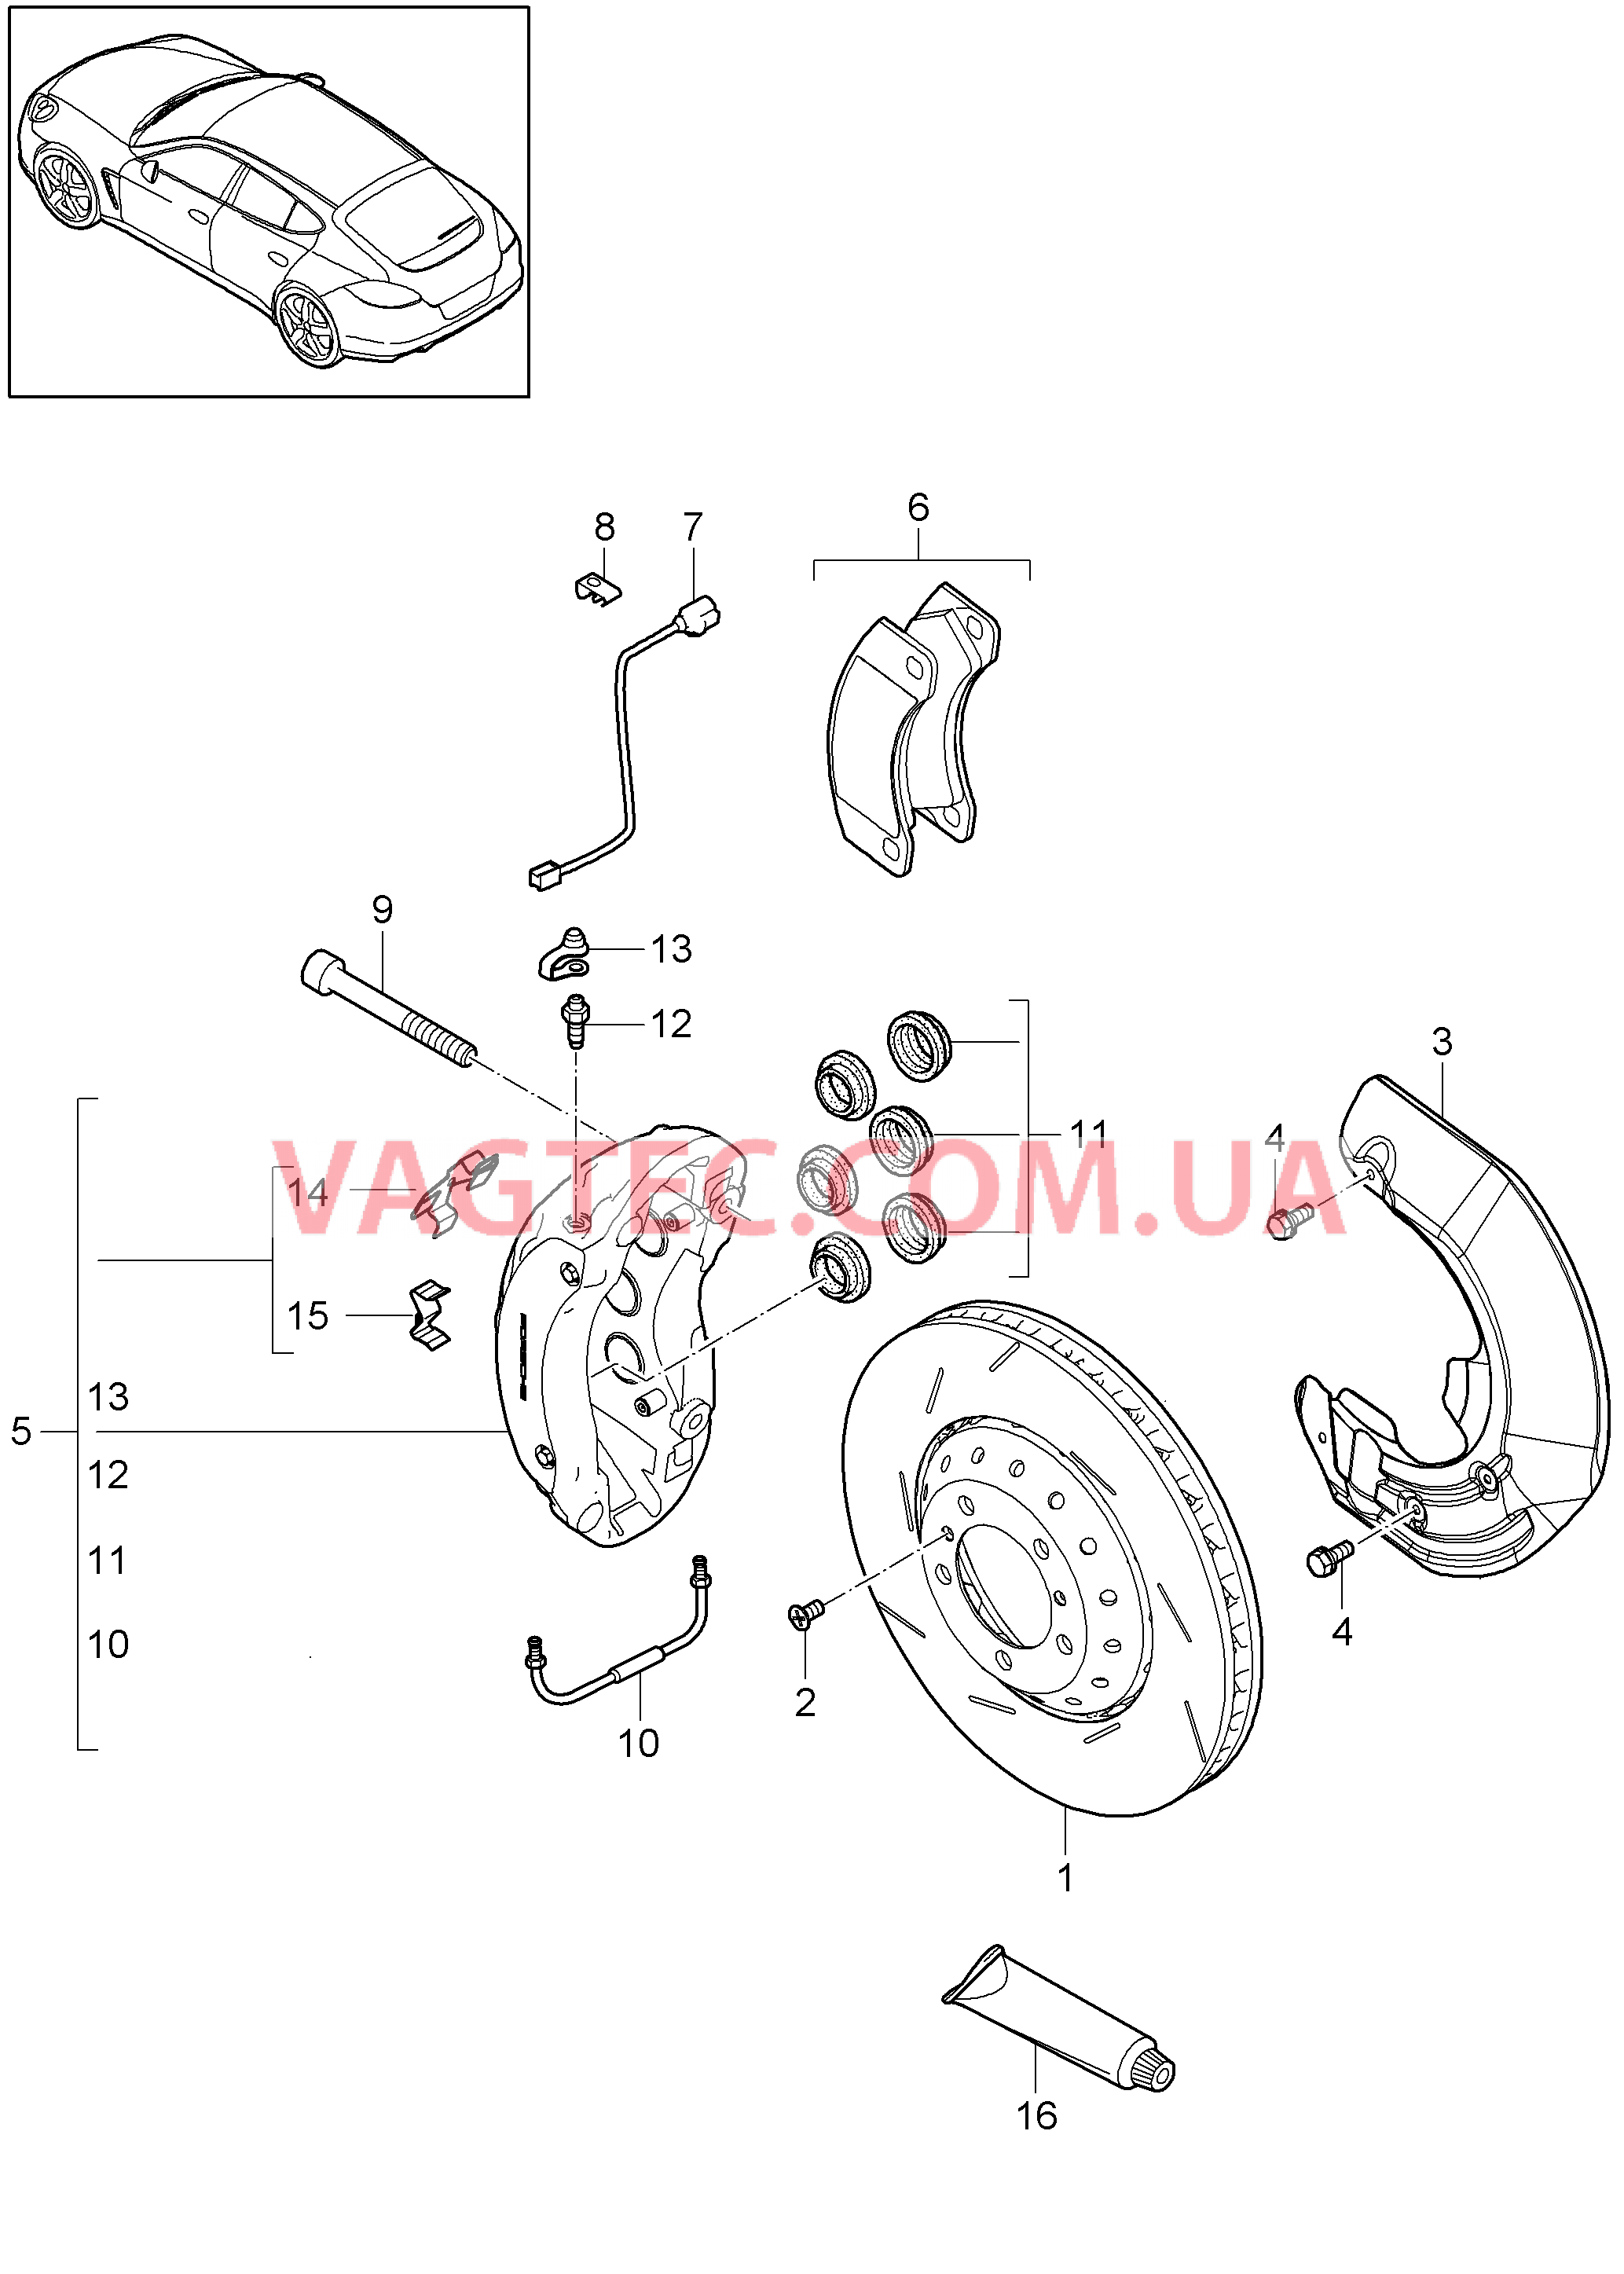 602-012 Дисковой тормоз, Передняя ось
						
						MCR.CB/CC, MCW.AA/FA/JA, MCG.EA/FA для PORSCHE Panamera 2010-2016